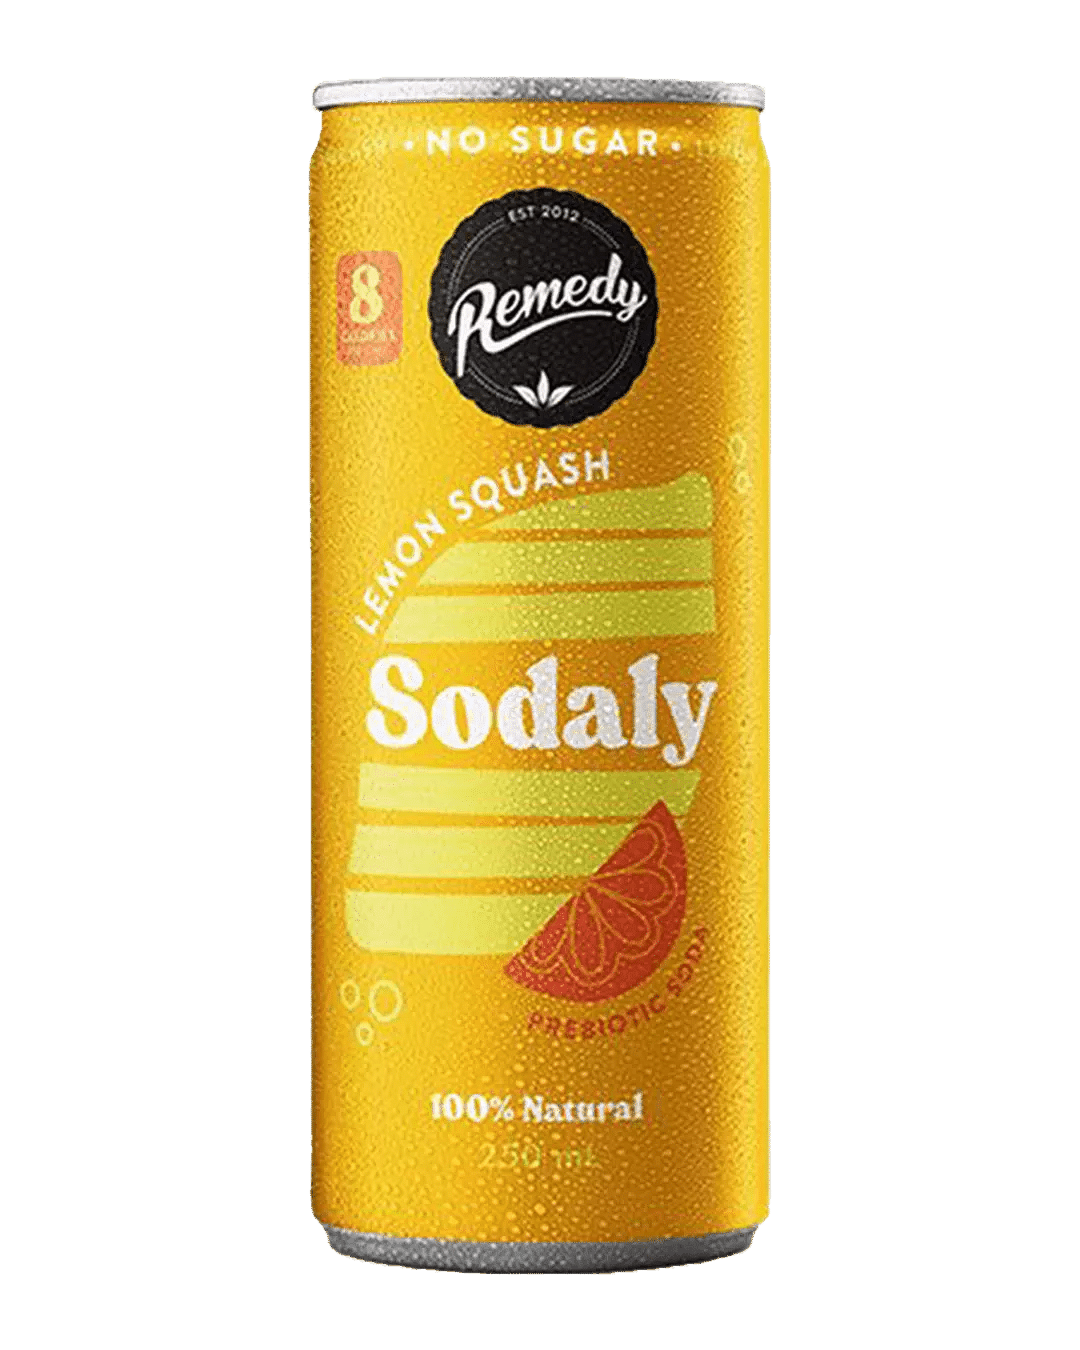 Remedy Sodaly Lemon Squash